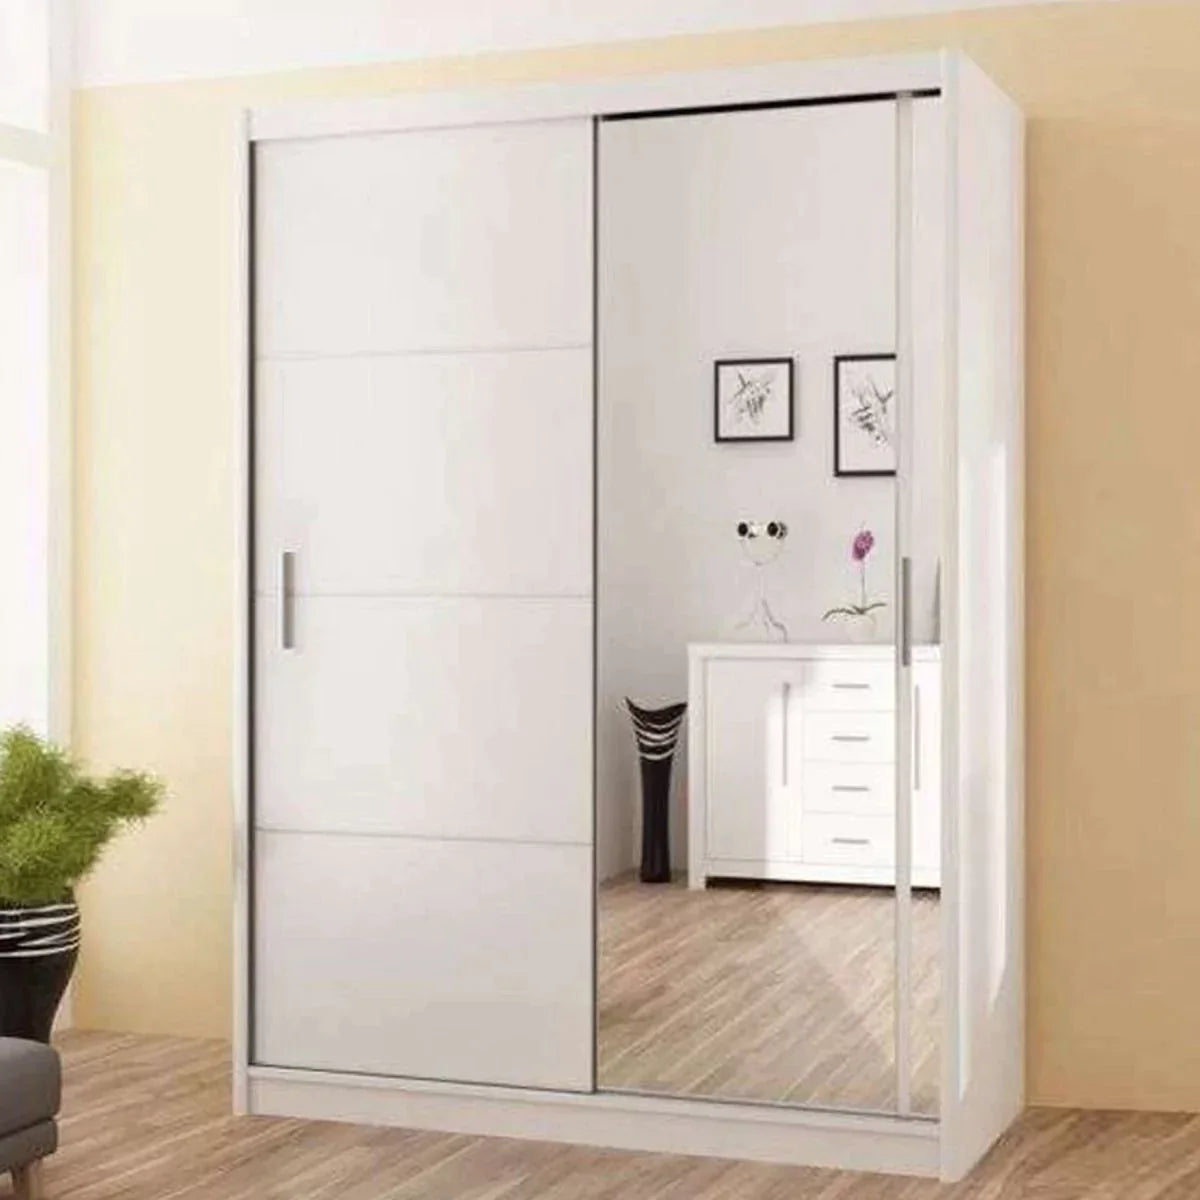 Broadland Sliding Door 150cm Wardrobe with Mirror - Black, Sonoma, White